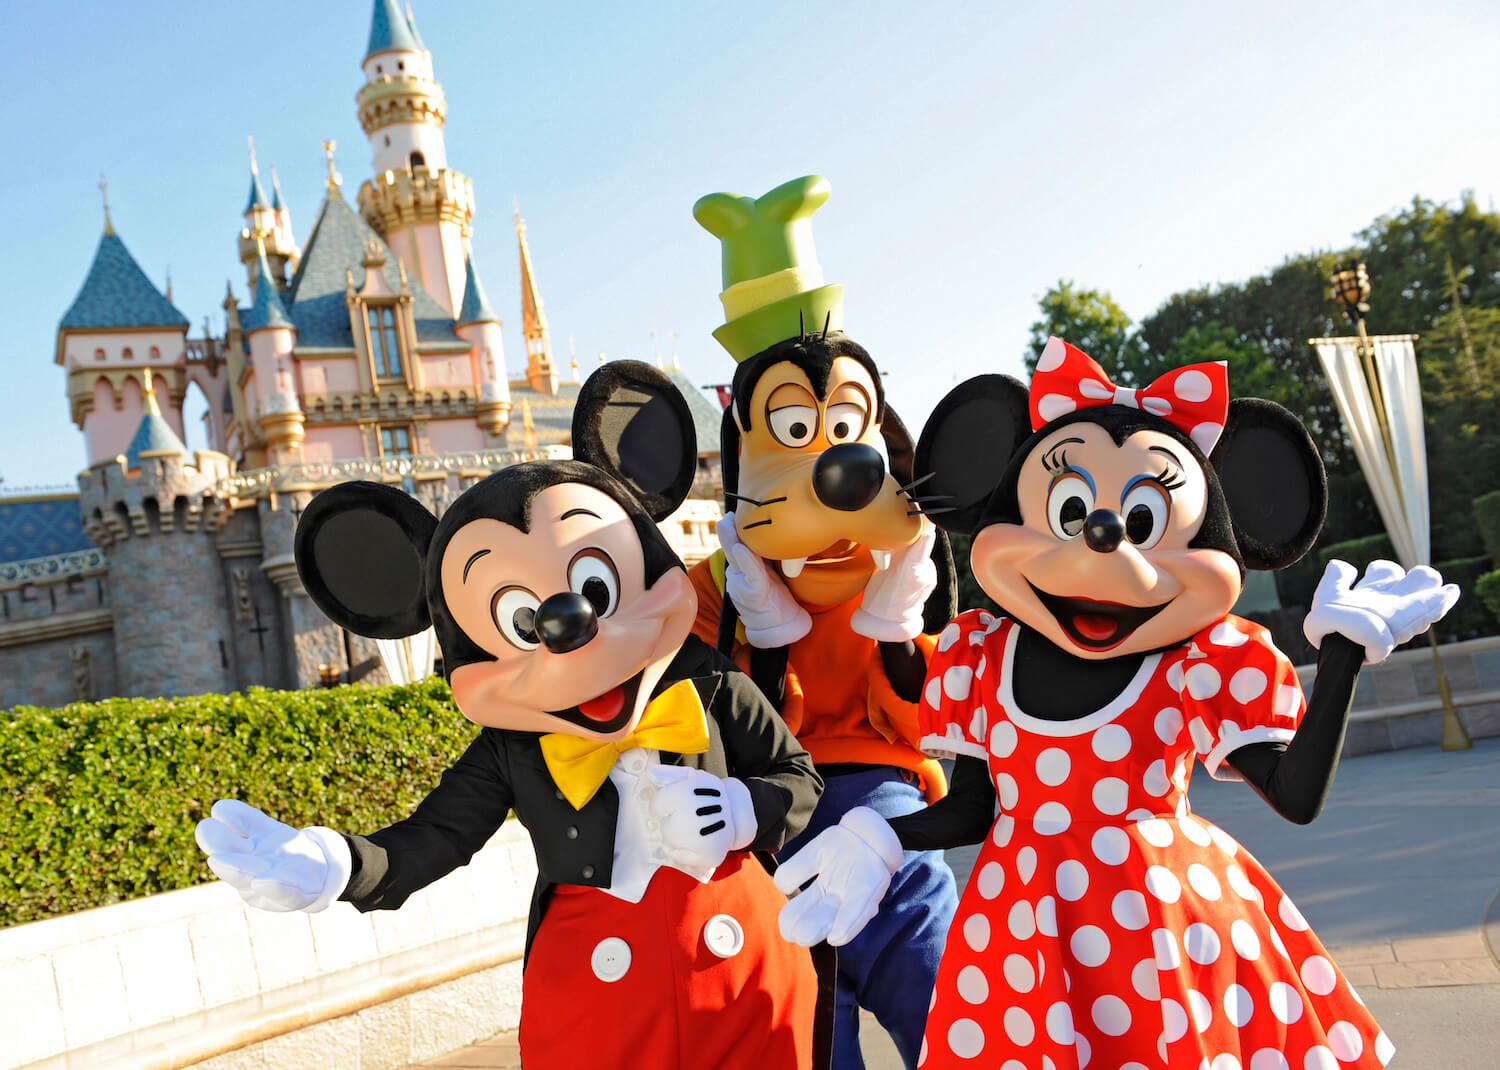 Mickey, Minnie and Goofy outside Disneyland California